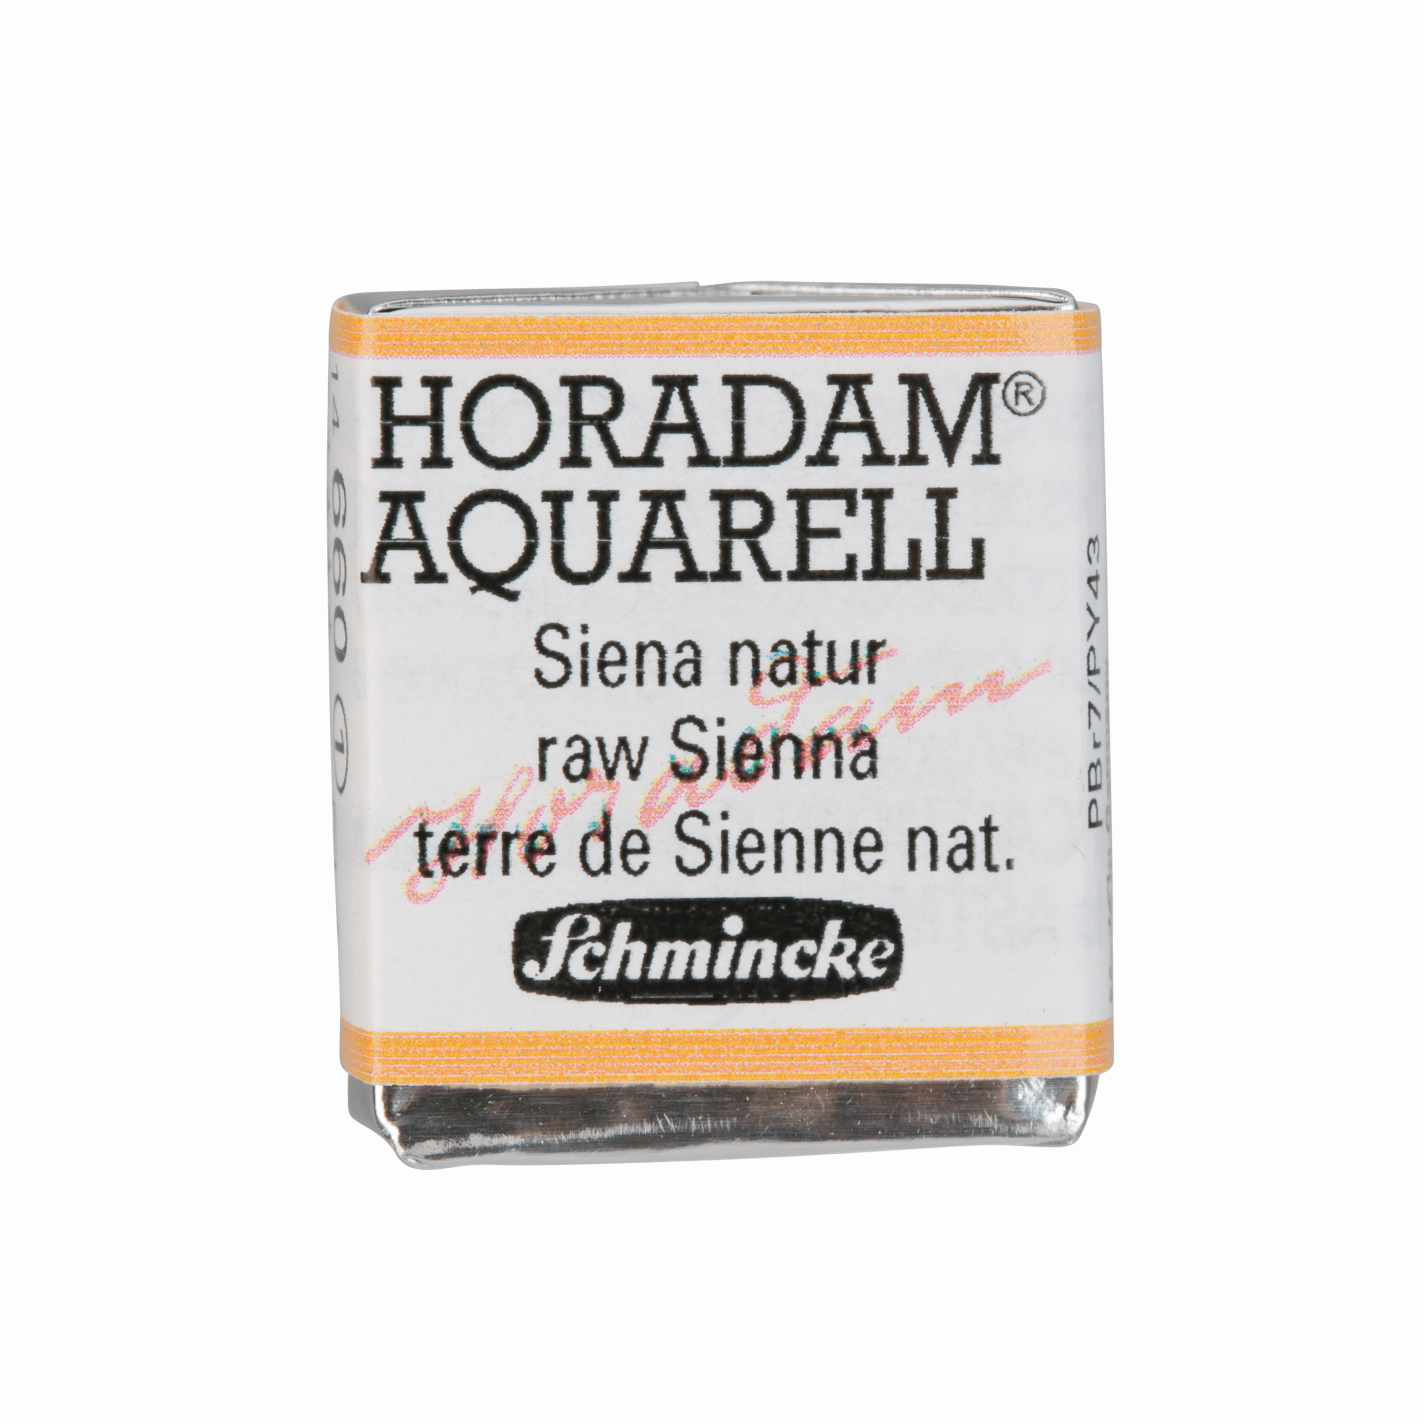 Schmincke Horadam Aquarell pans 1/2 pan Raw Sienna